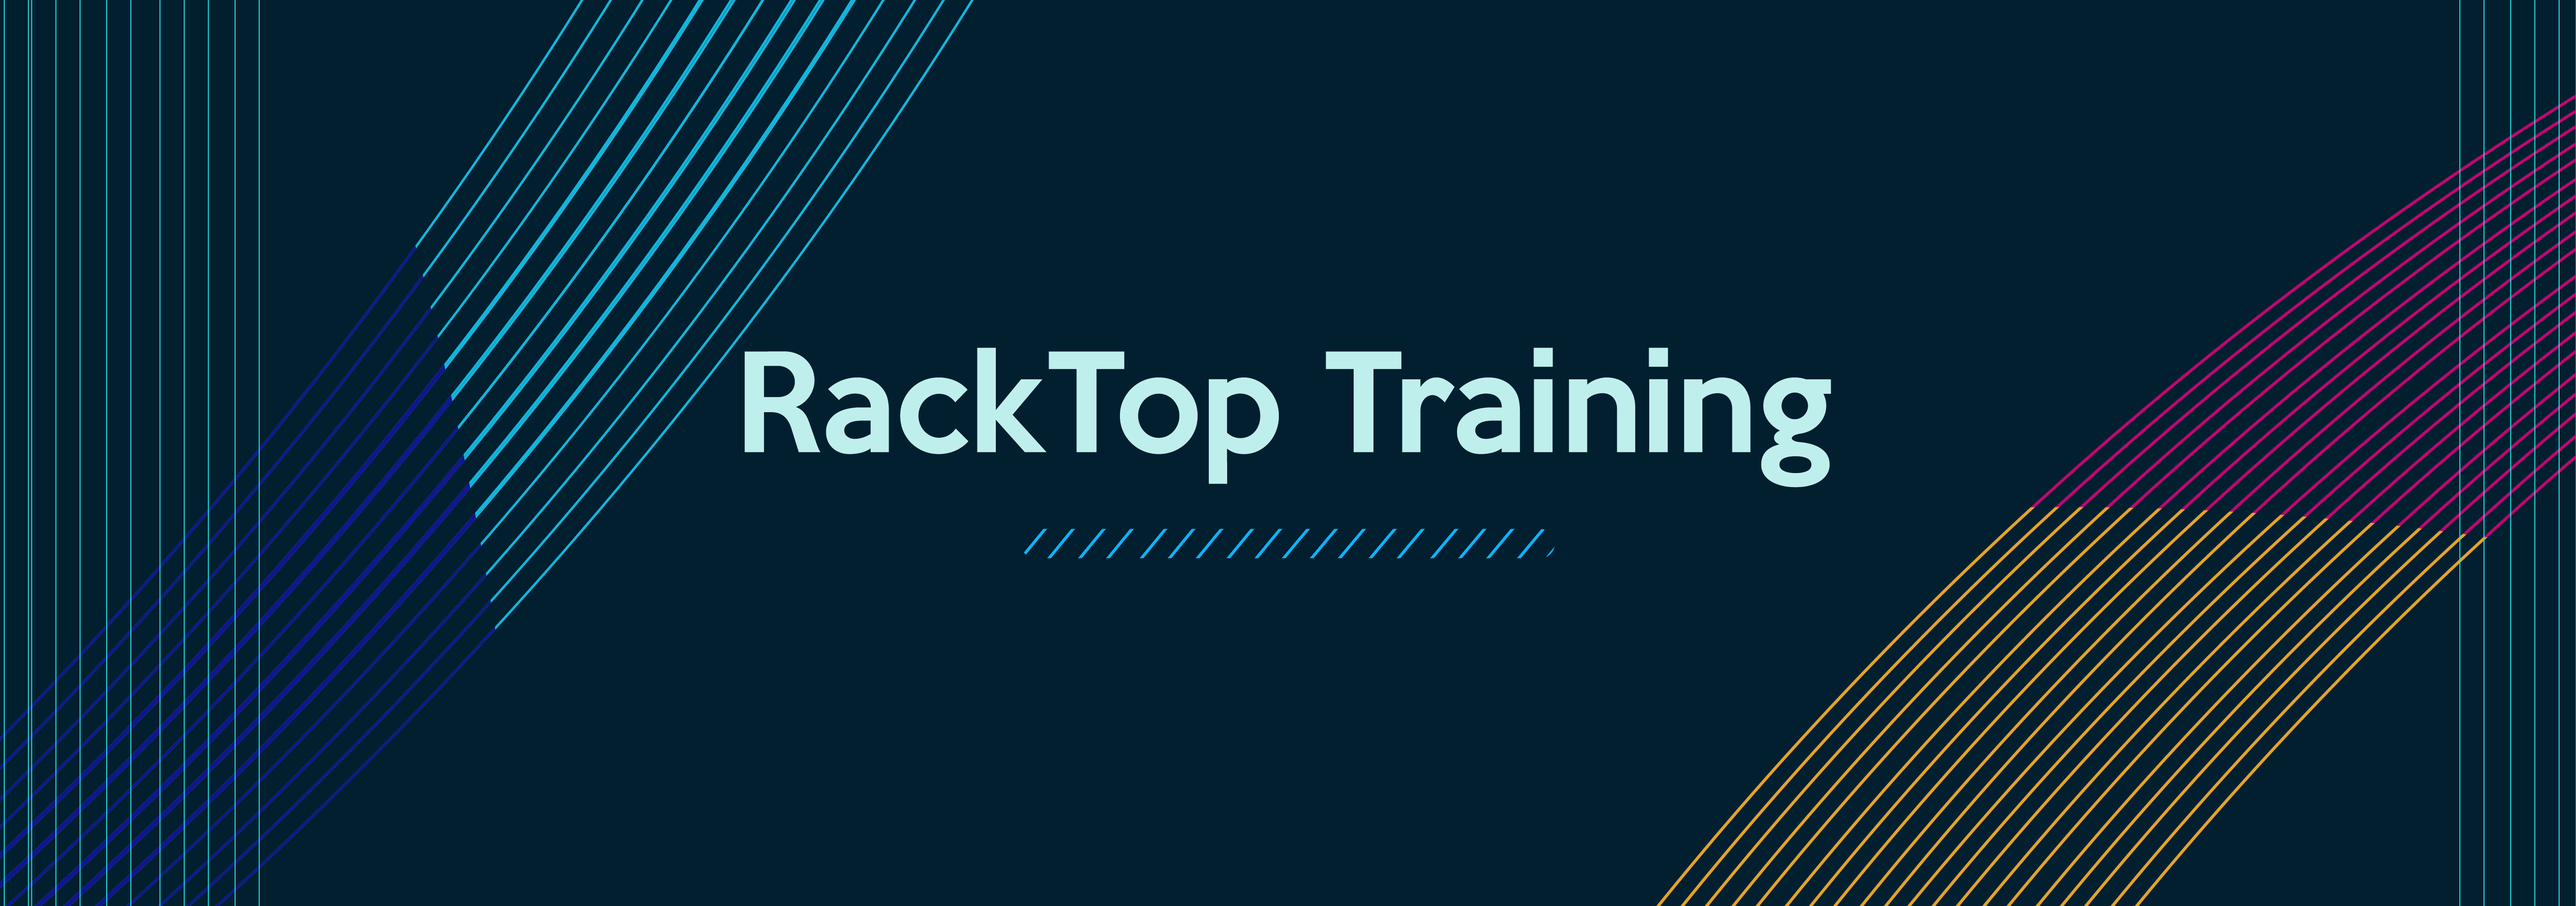 RackTop_Training_header_new